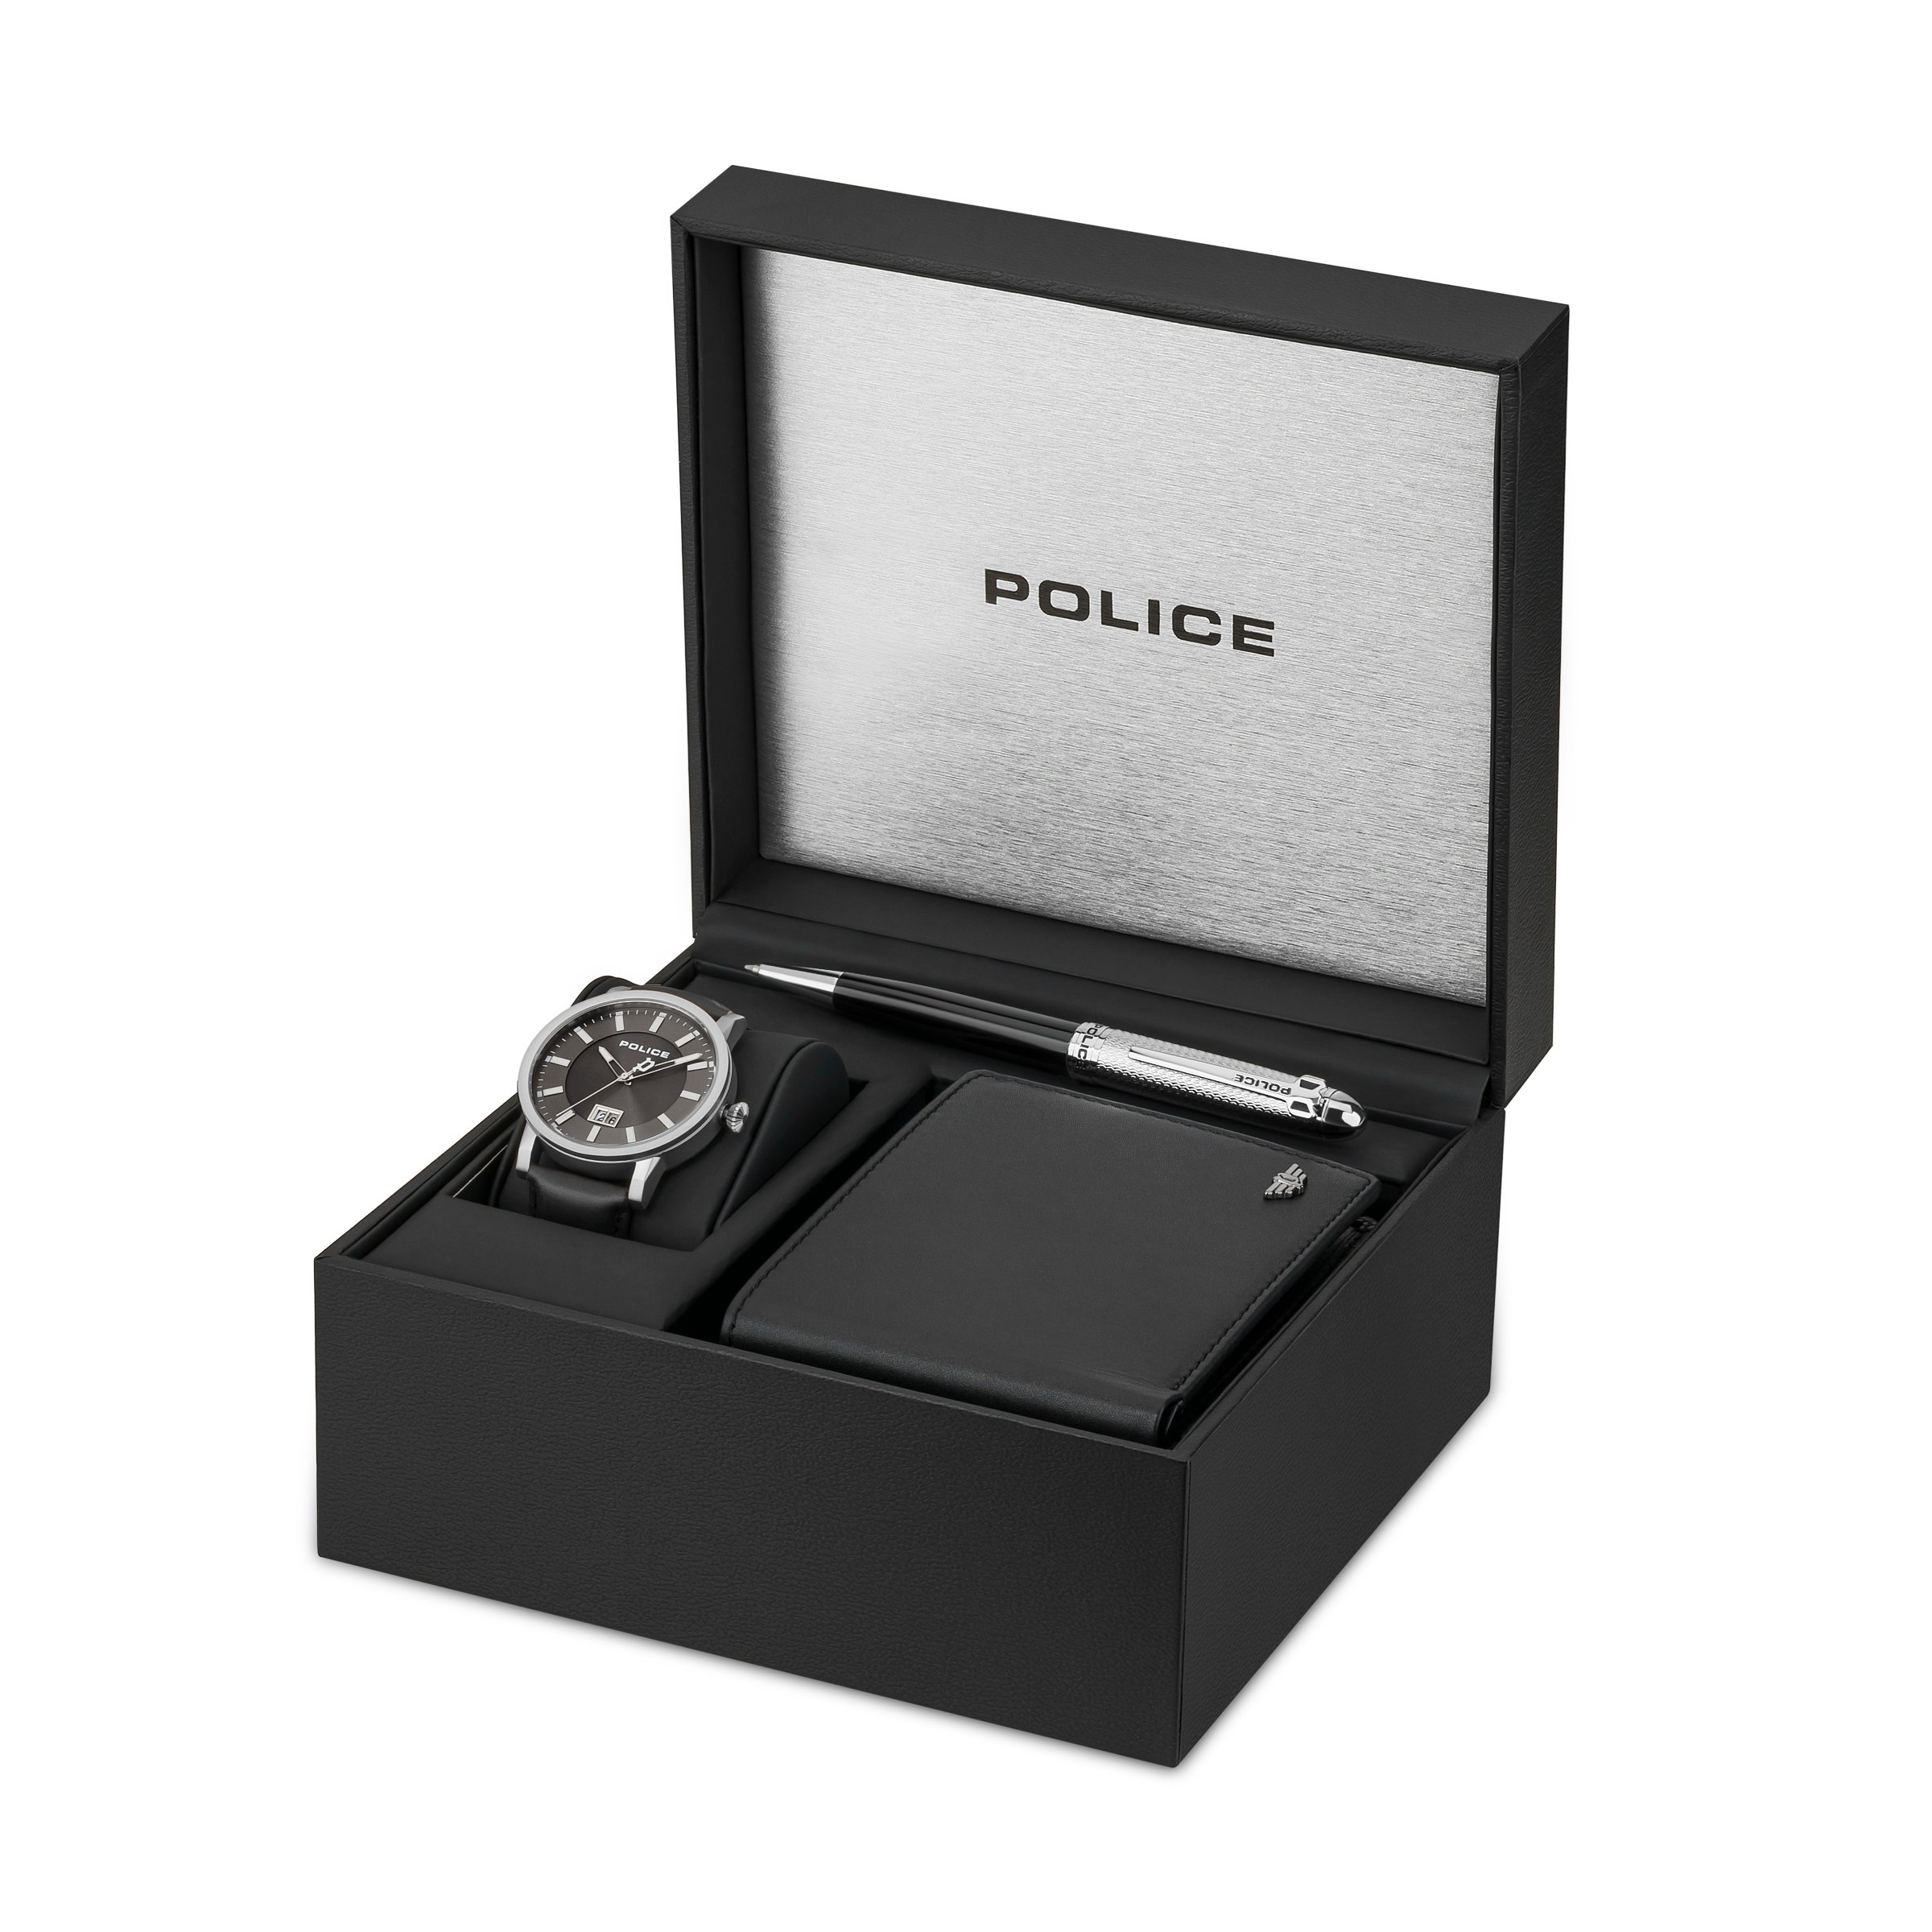 Police Set Box For Men, Watch, Wallet, Pen